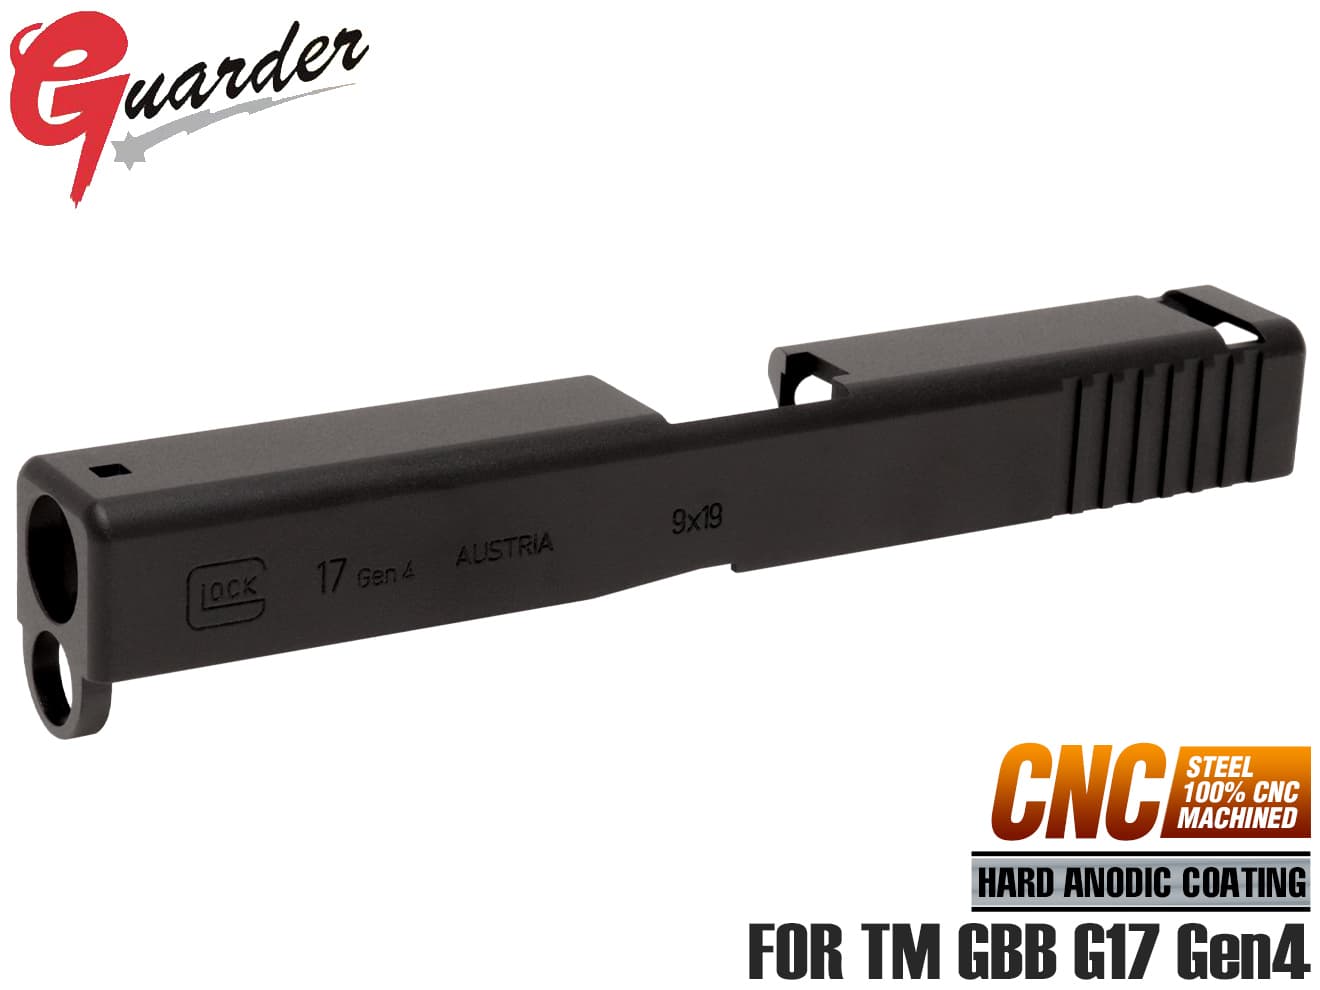 GLK-211(BK)■GUARDER G17 Gen4 9mm アルミCNC スライド for マルイ G17 Gen4◆GLOCK グロック ガーダー ガスブローバック ブラスト処理 マットな質感再現